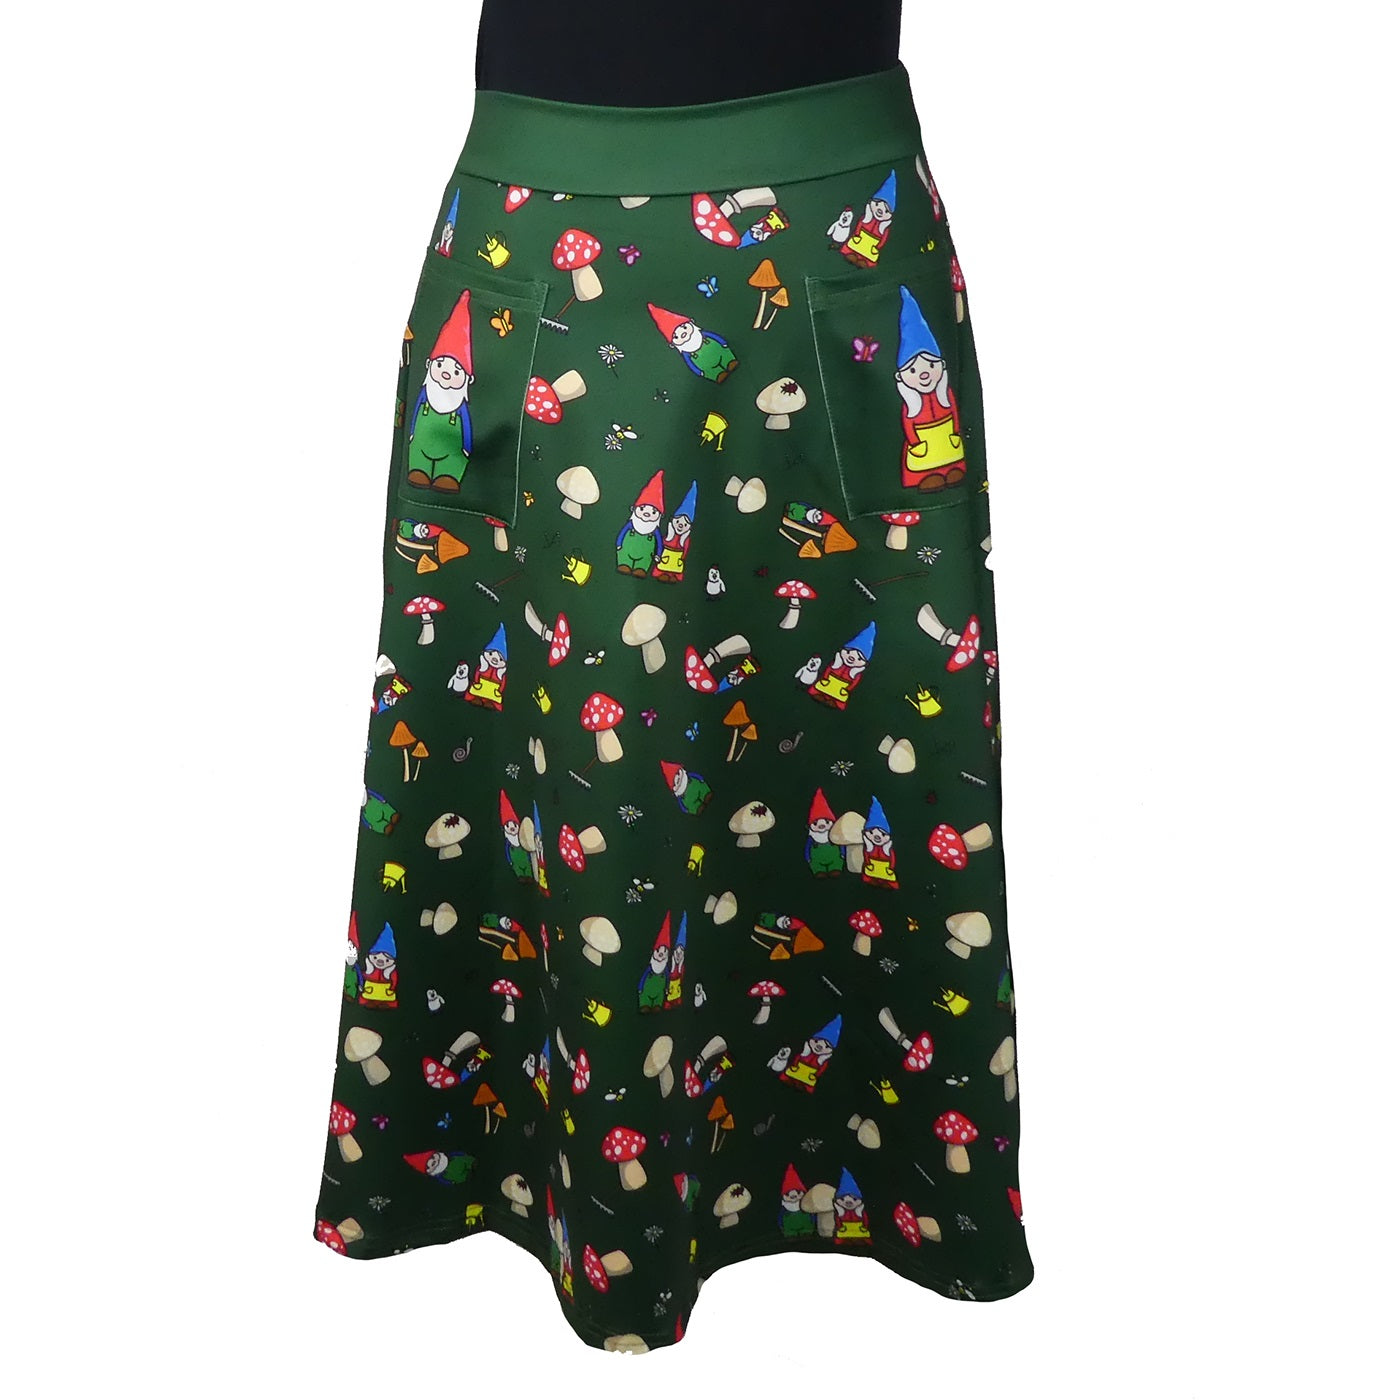 Mr & Mrs Gnome Original Skirt by RainbowsAndFairies.com.au (Garden Gnome - Cute Gnomes - Skirt With Pockets - Aline - Vintage Inspired - Mod Retro) - SKU: CL_OSKRT_GNOME_ORG - Pic-01